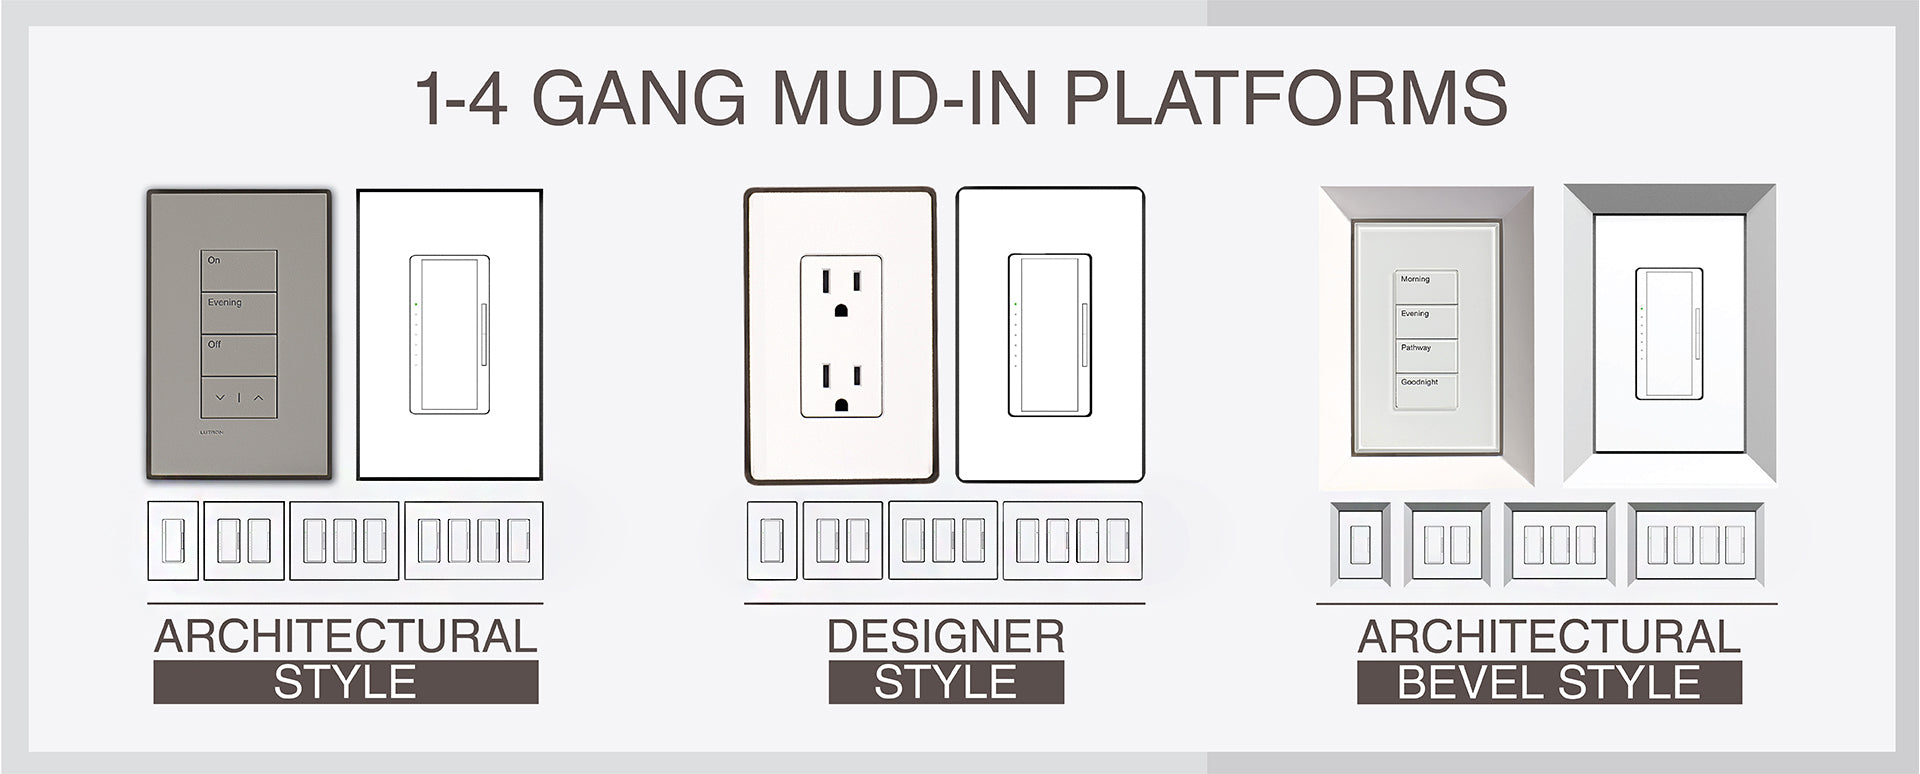 1-4 Gang Mud-In Platforms